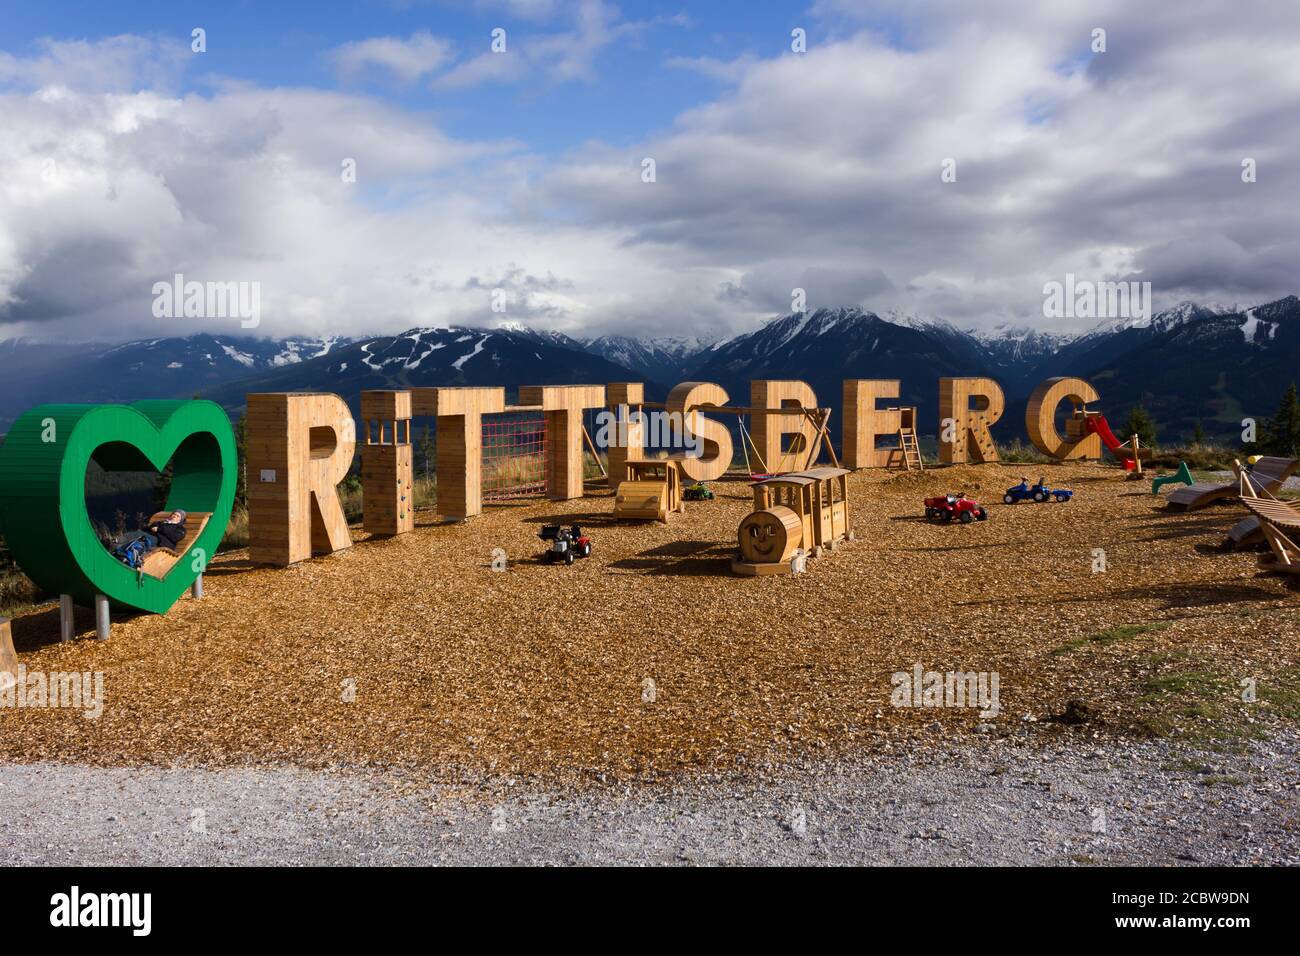 Ecologic playground near the summit of the 'Rittisberg' mountain in the Austrian Alps (Ramsau am Dachstein, Styria, Austria) Stock Photo